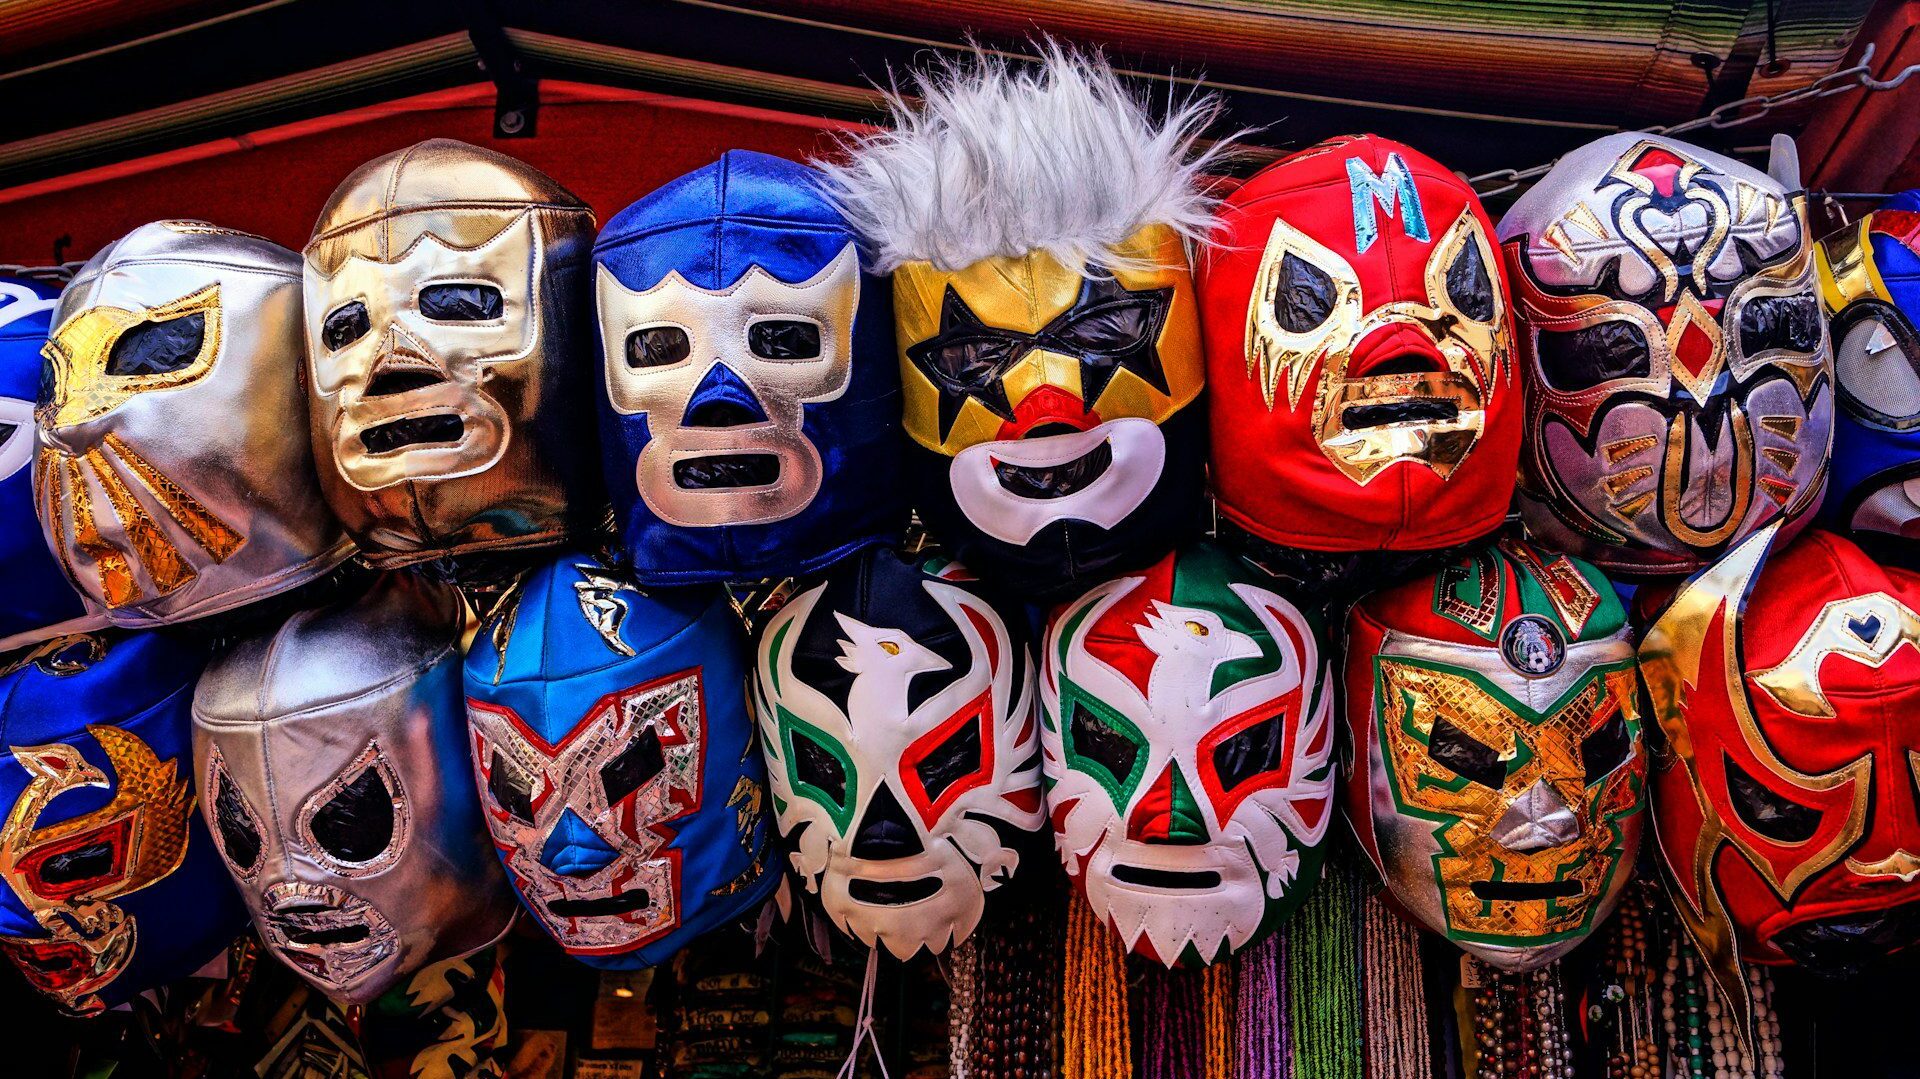 Various Lucha libre wrestling masks hanging up outside a market stall